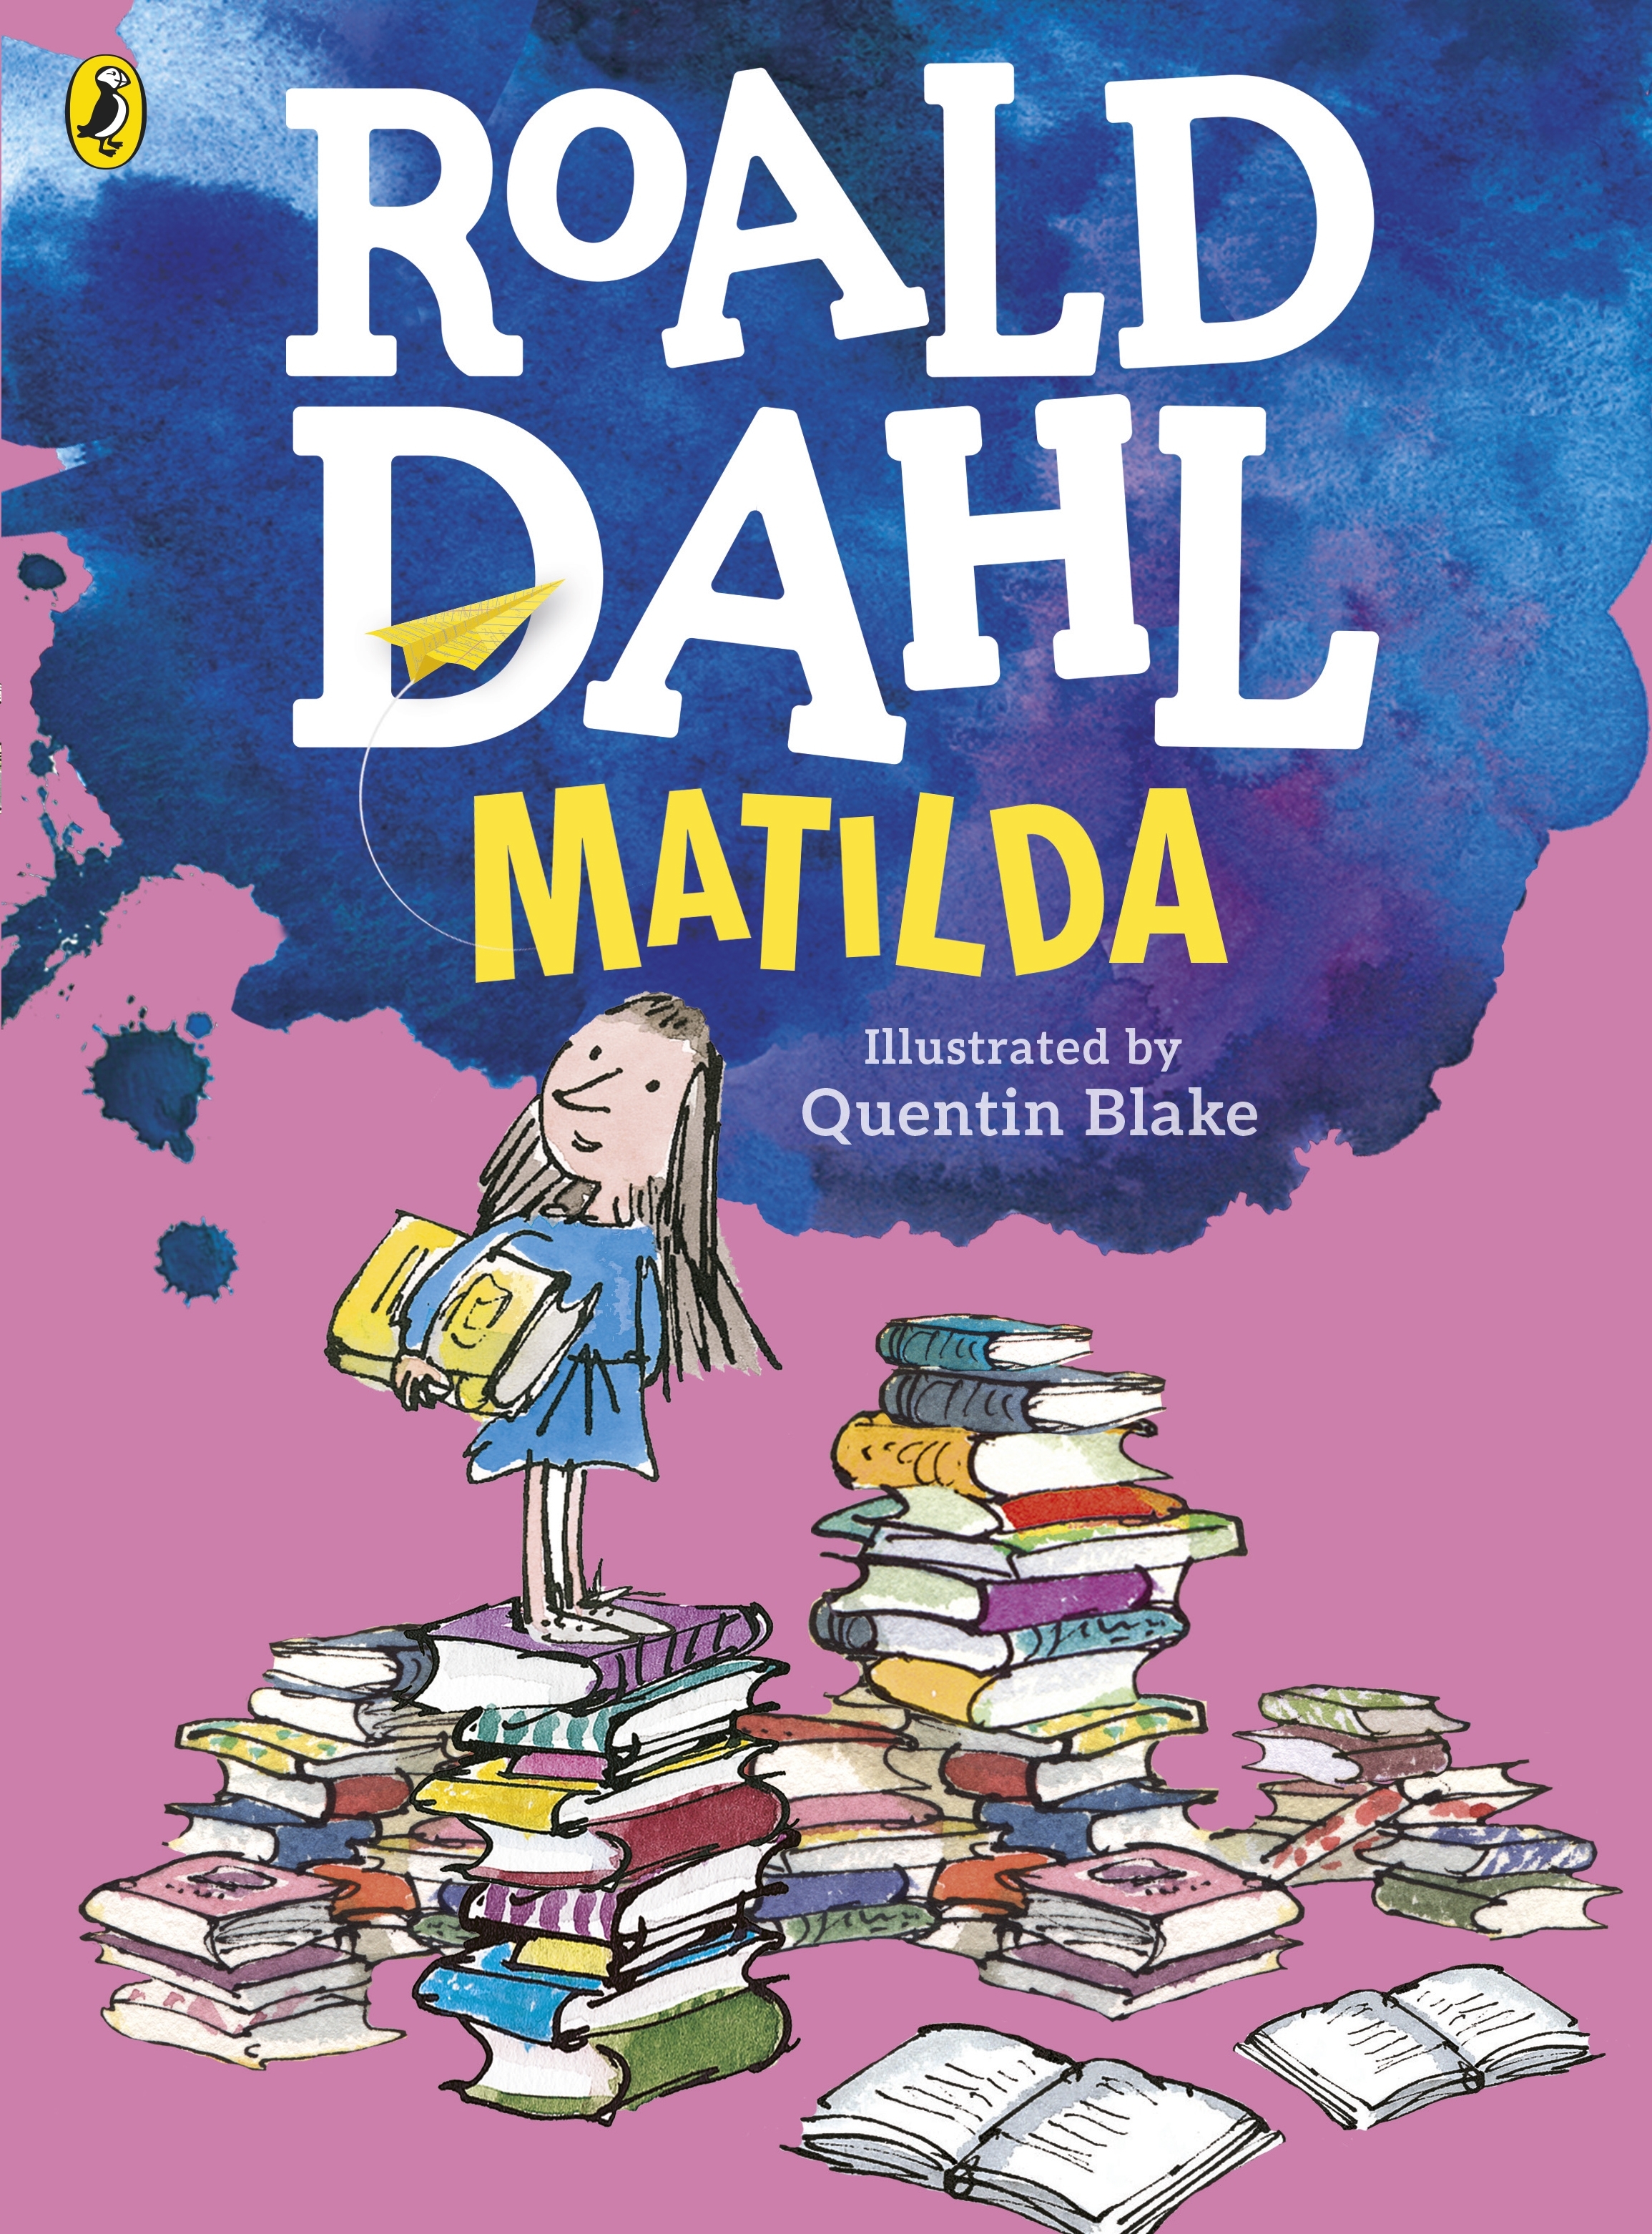 Matilda by Roald Dahl - Penguin Books New Zealand